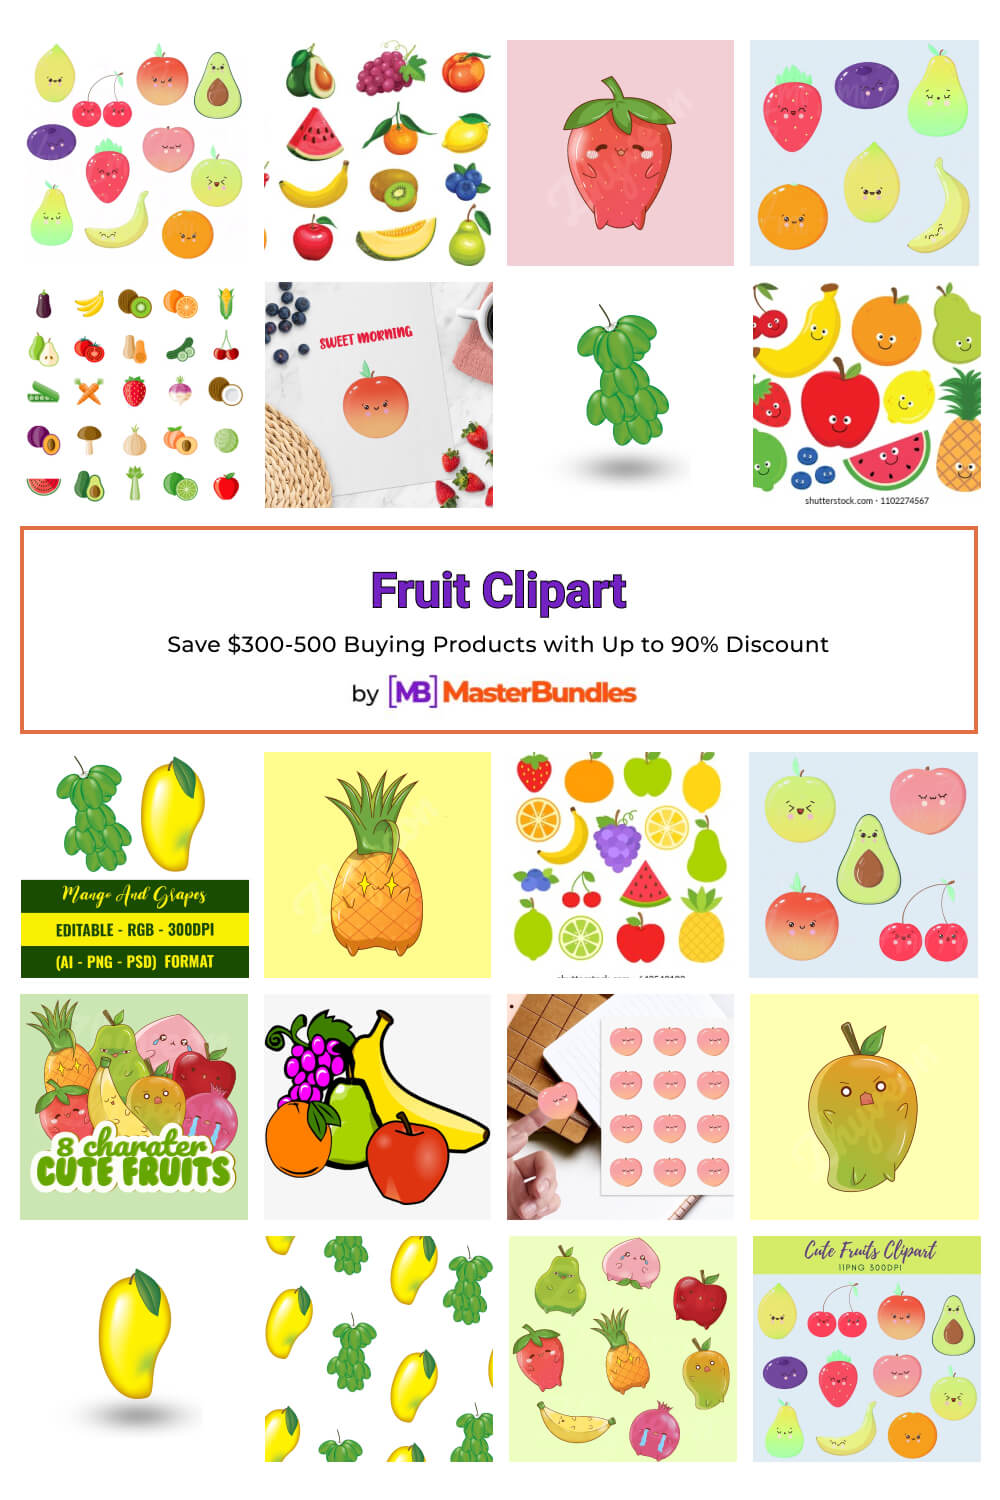 fruit clipart pinterest image.